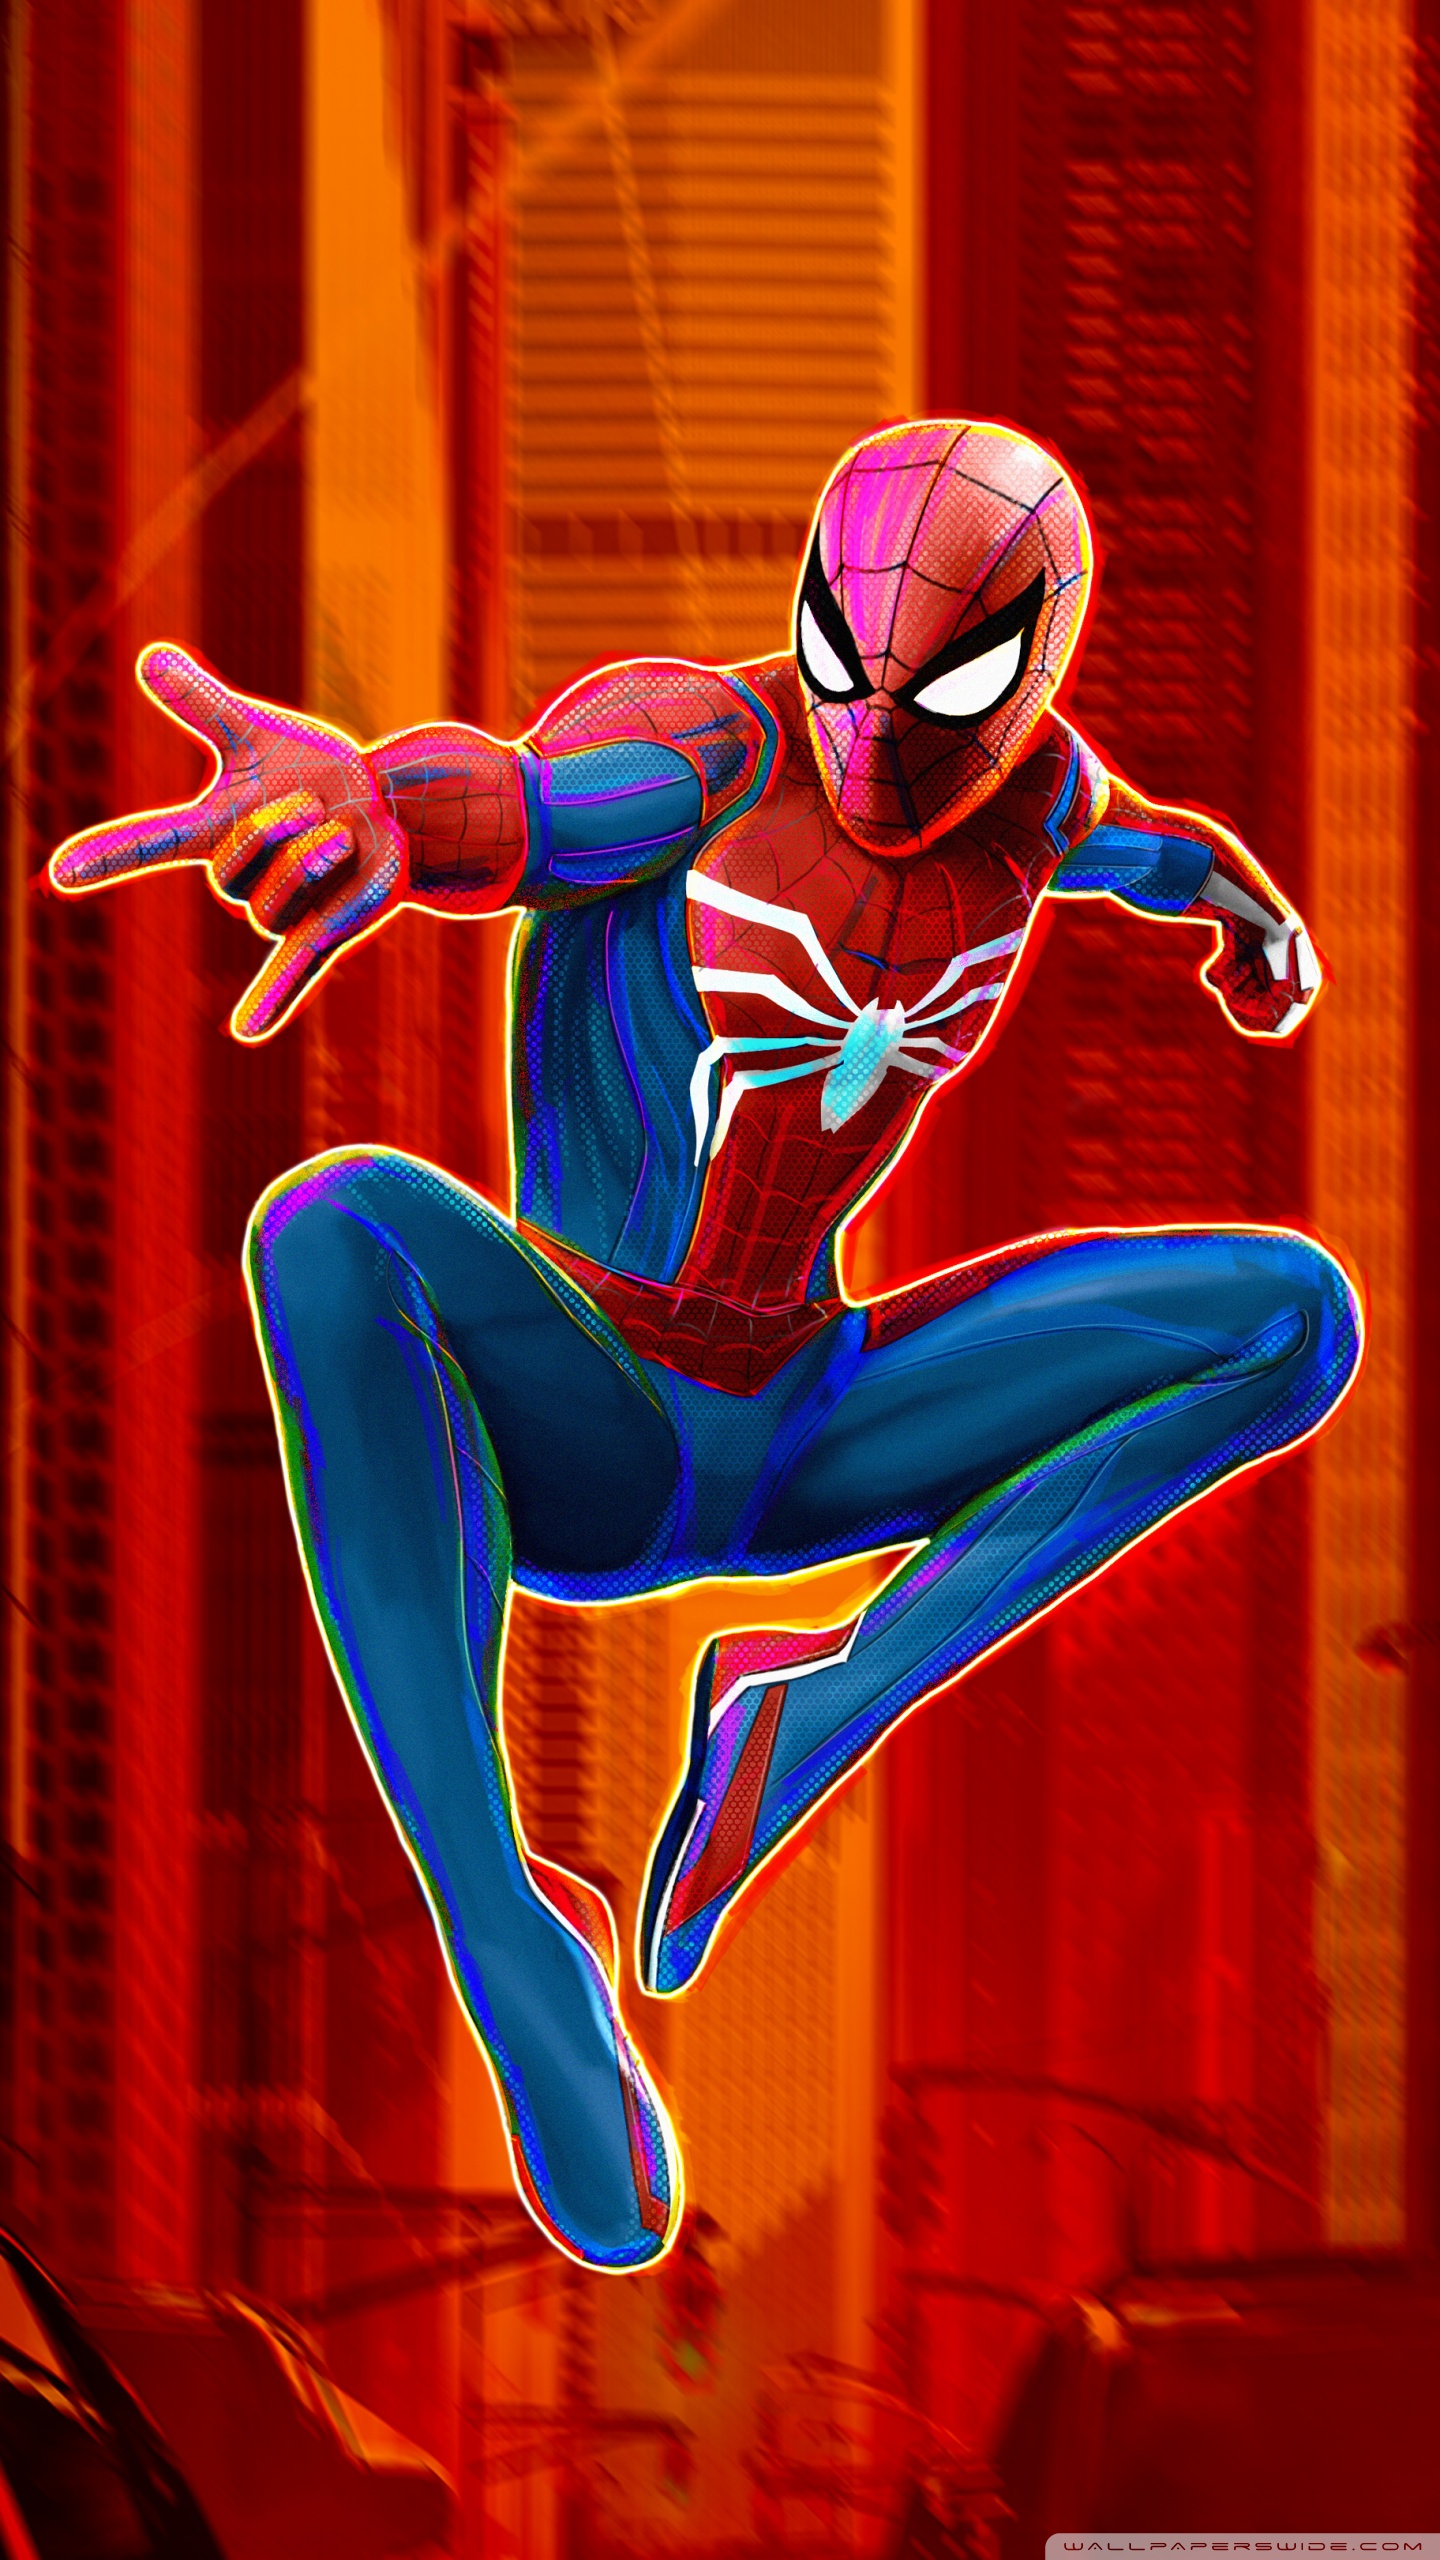 Spider man wallpapers 4k  Download HighResolution Images